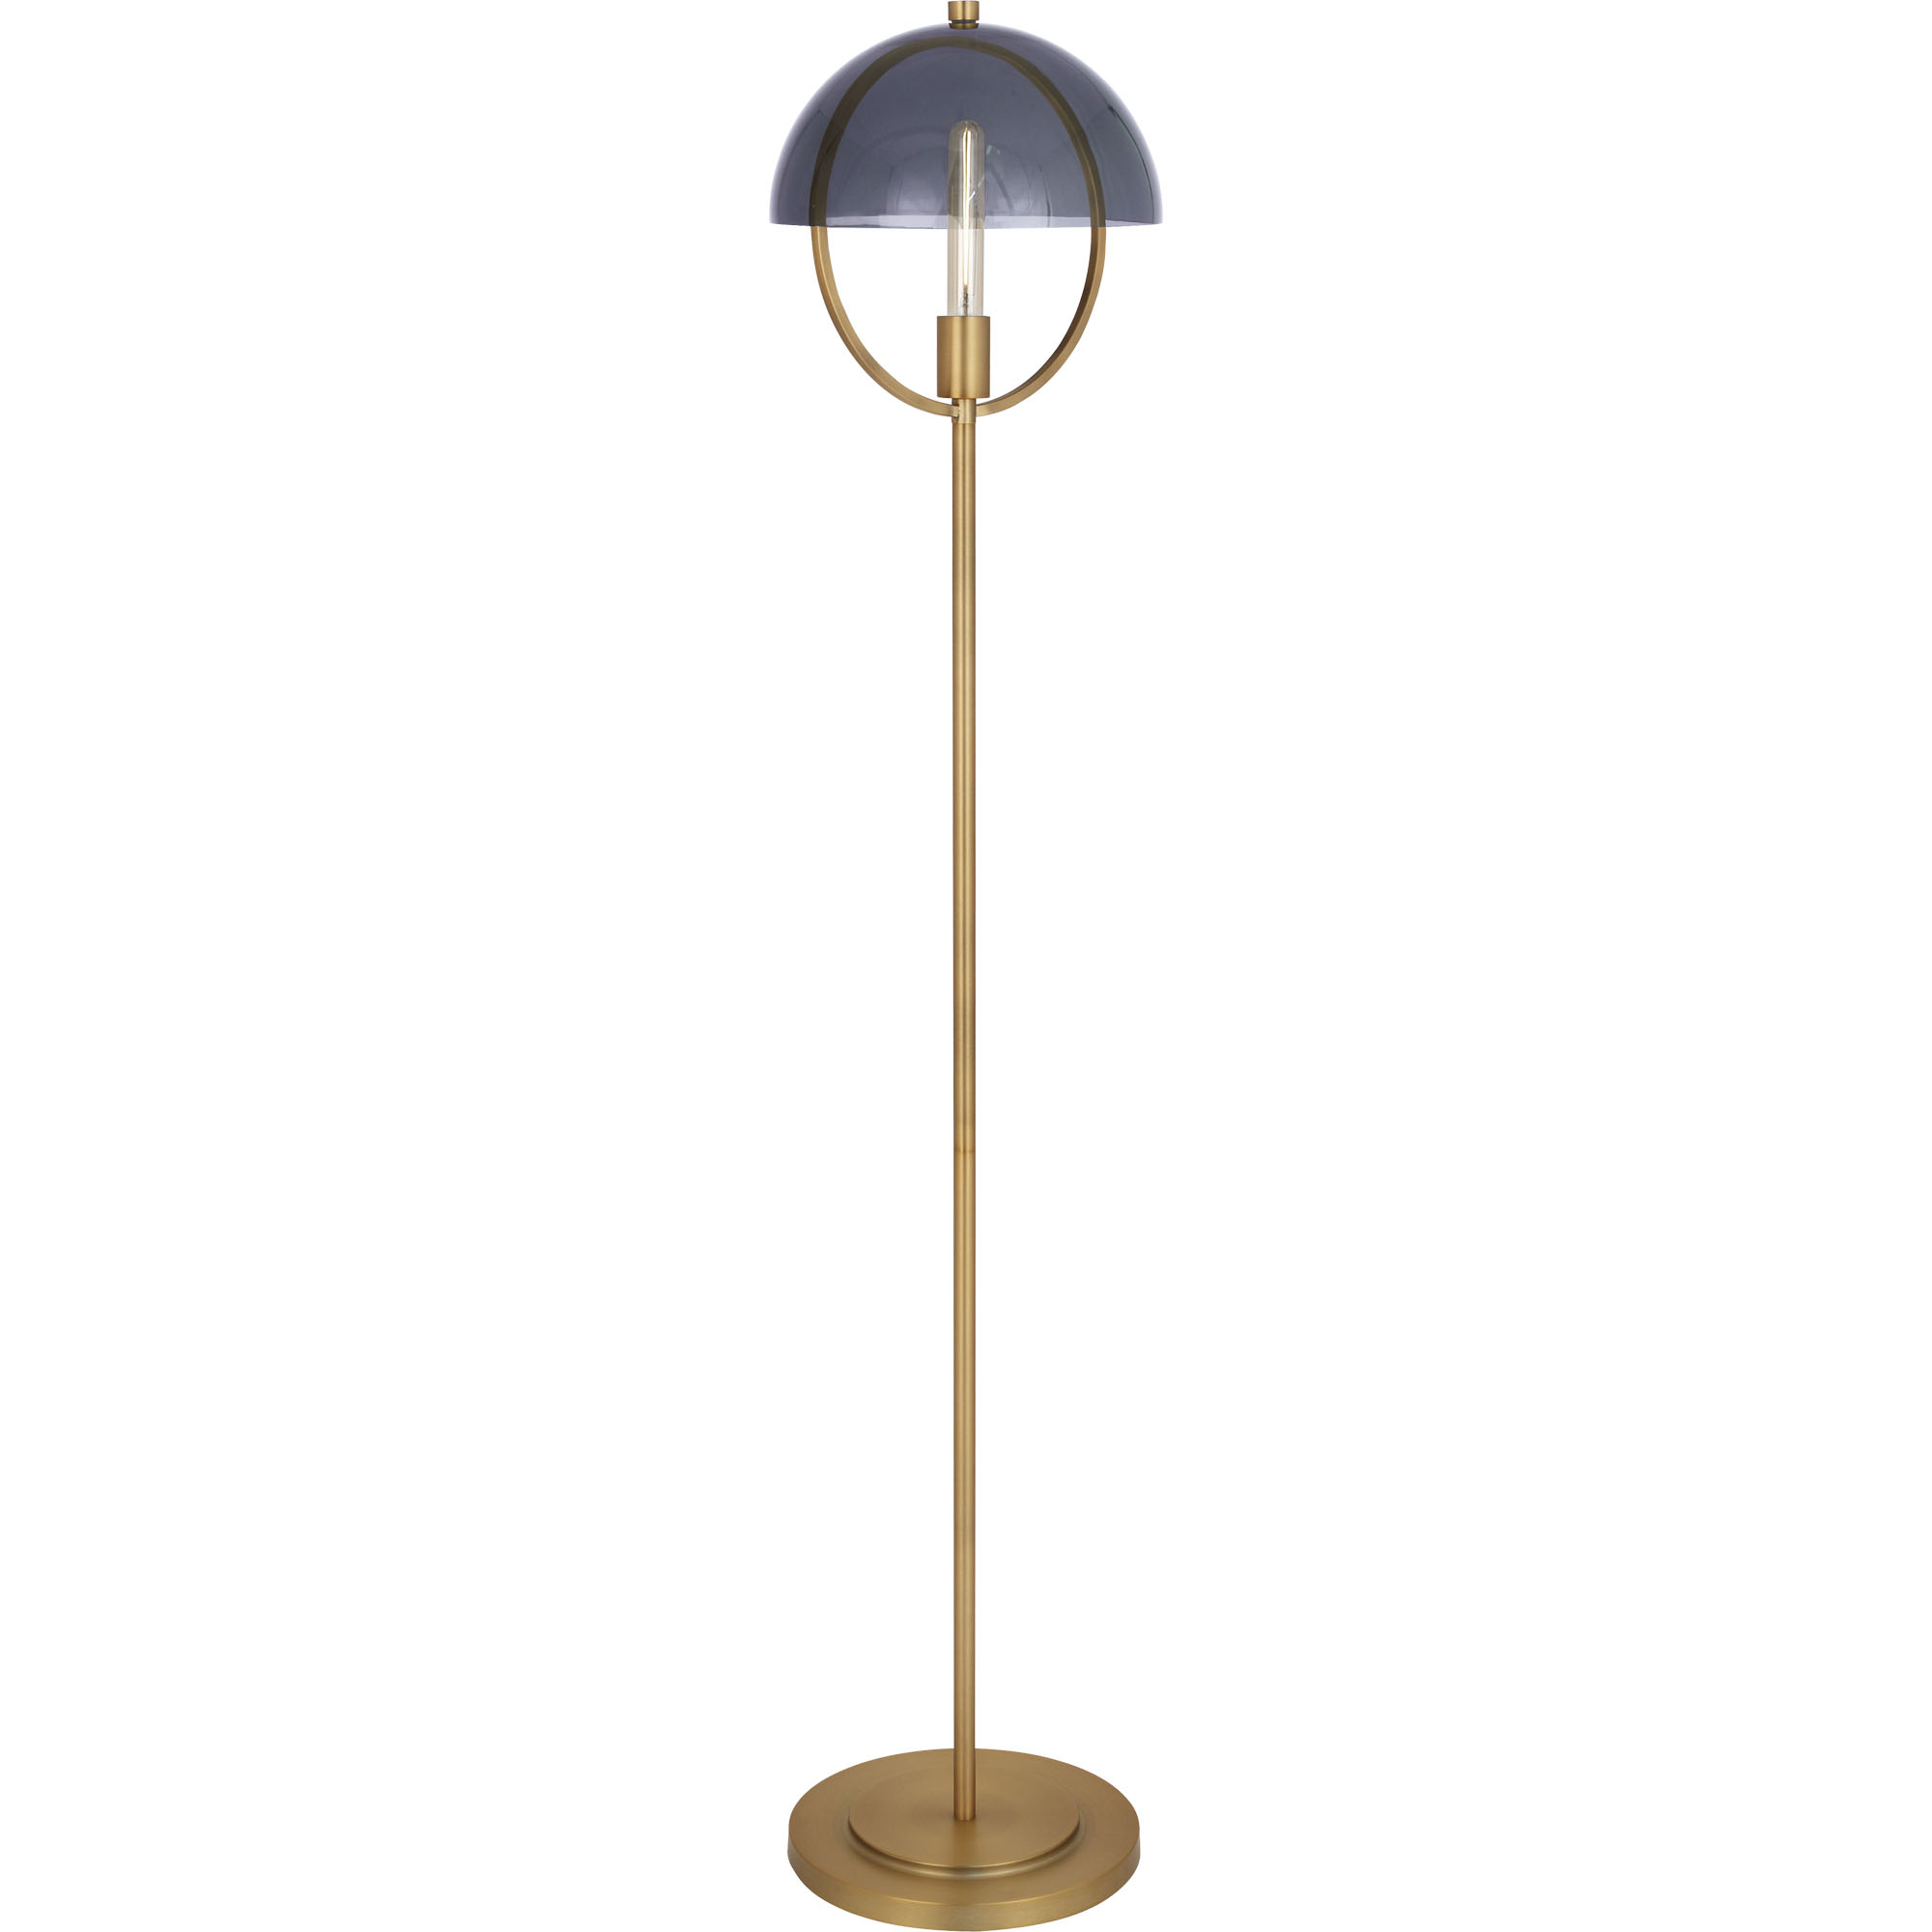 Mavisten Edition Copernica Floor Lamp Style #601